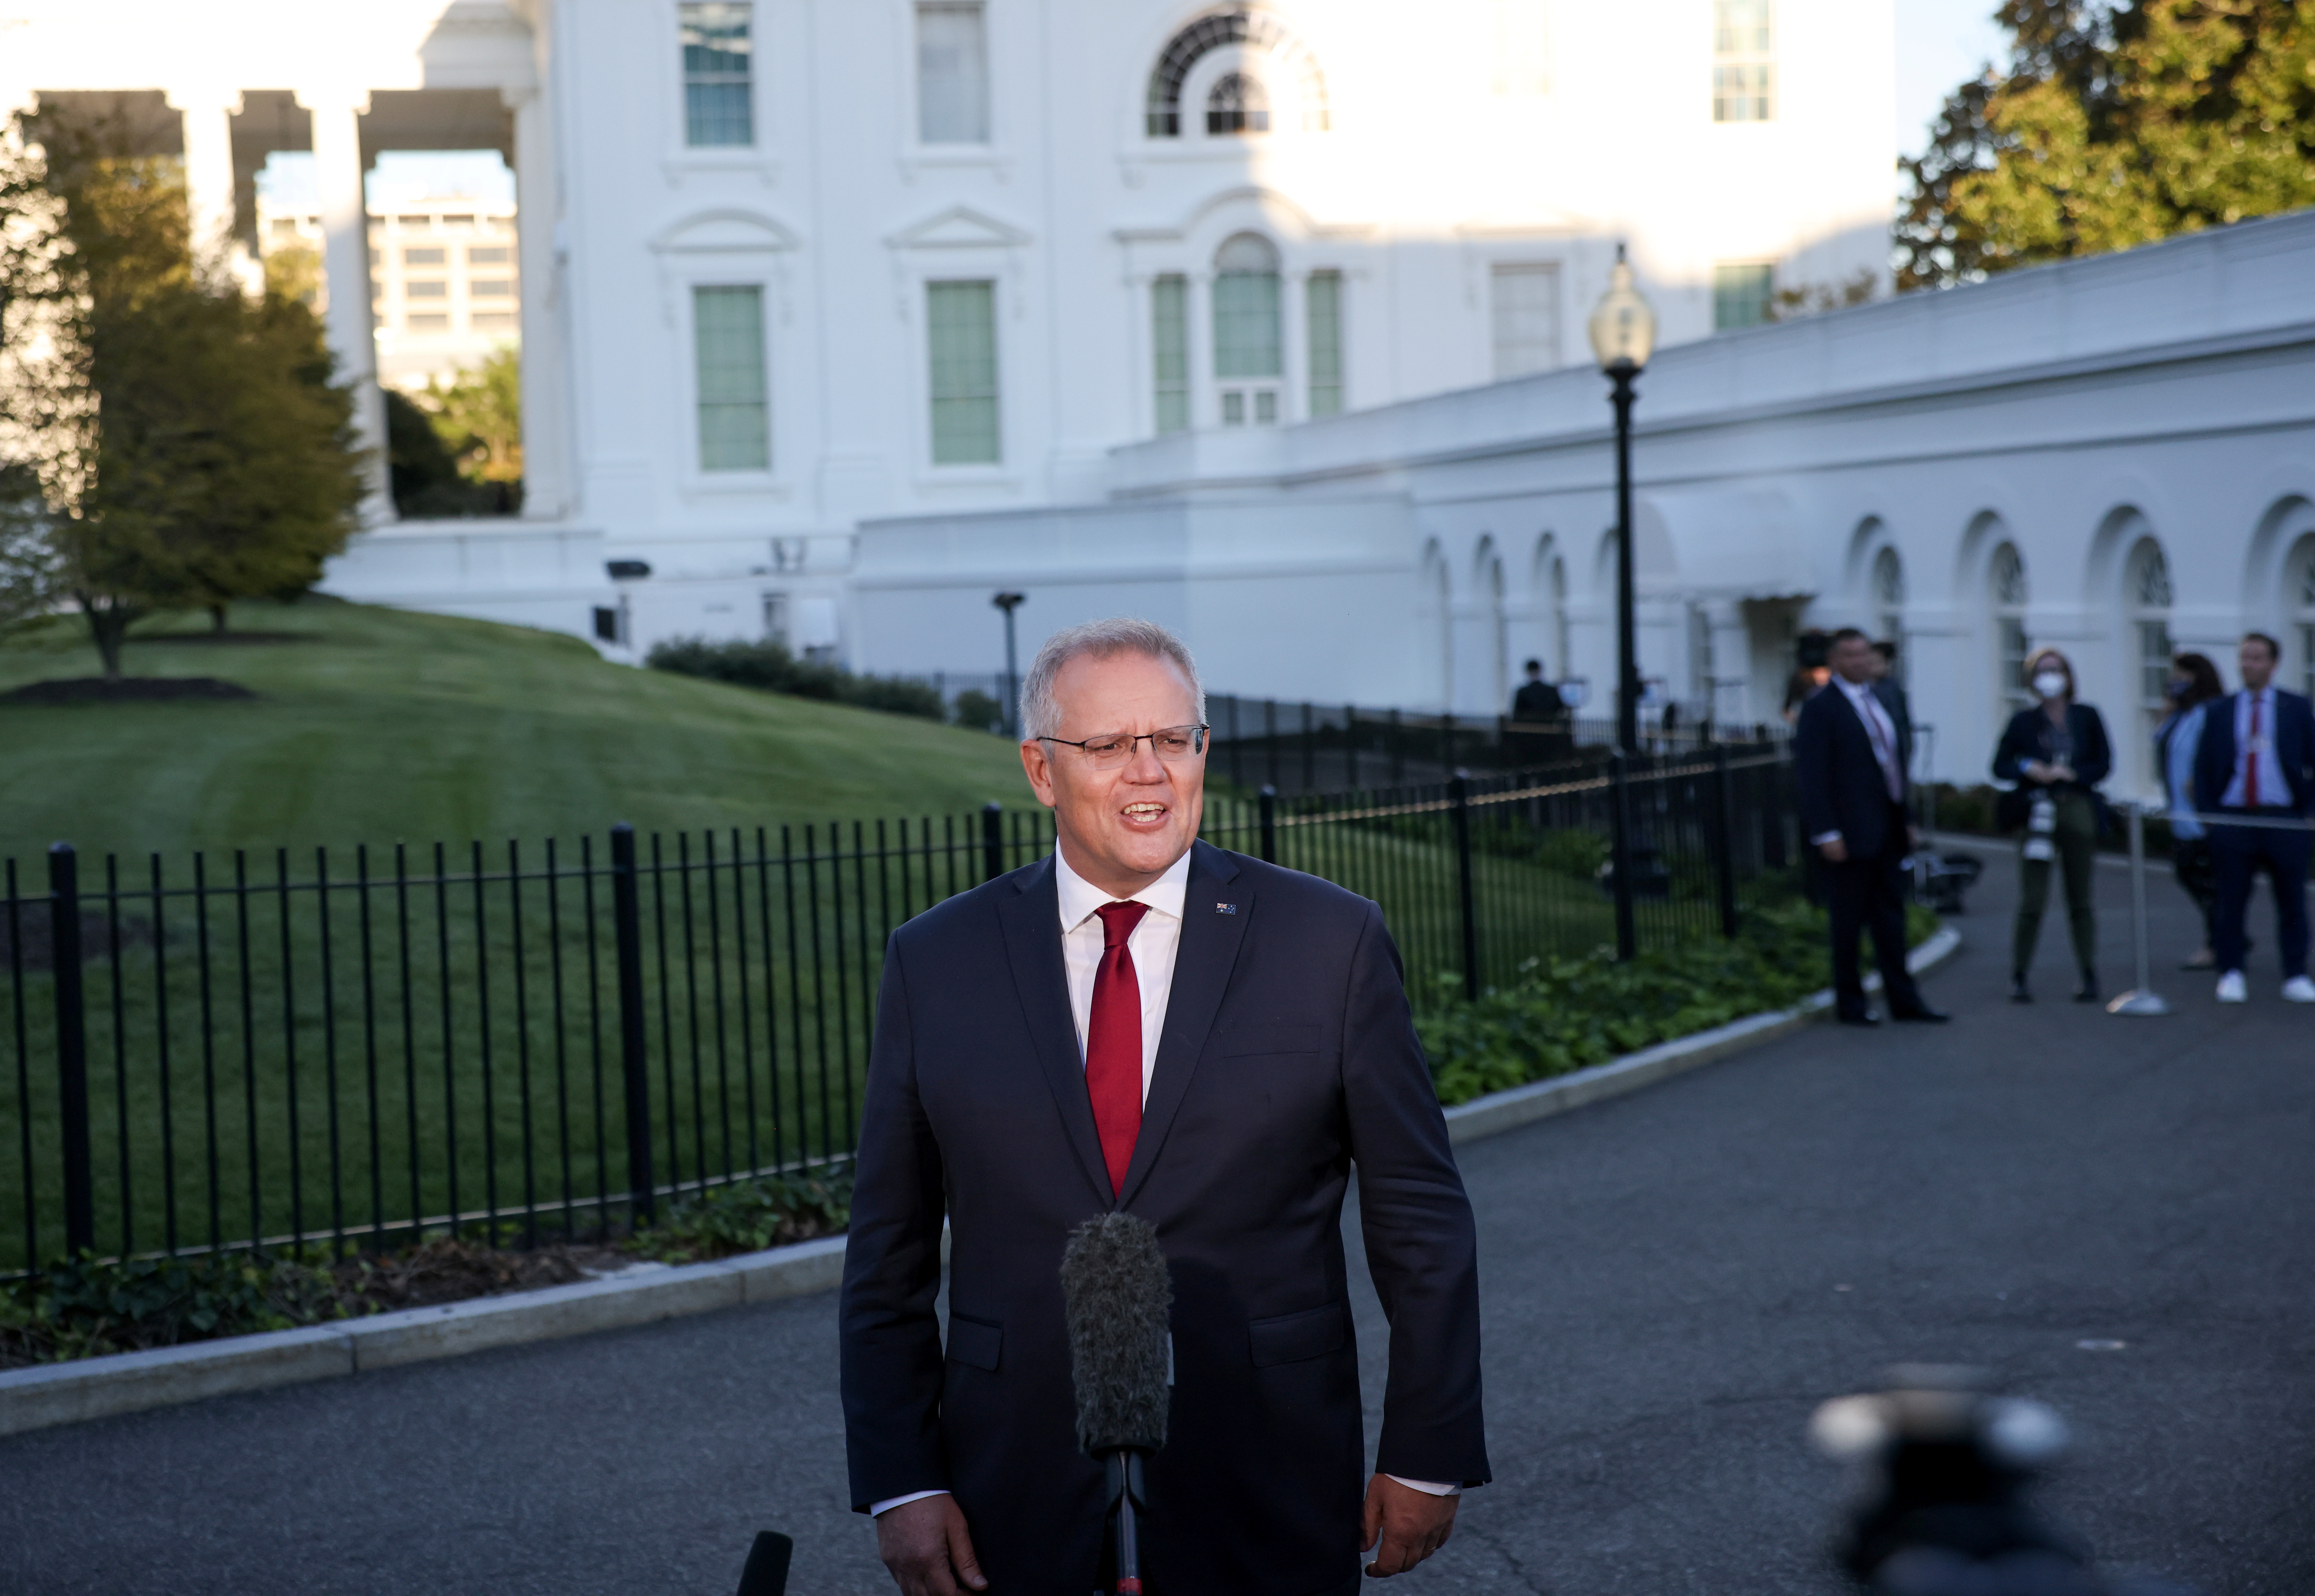 Australia's PM Morrison speaks with the media in Washington